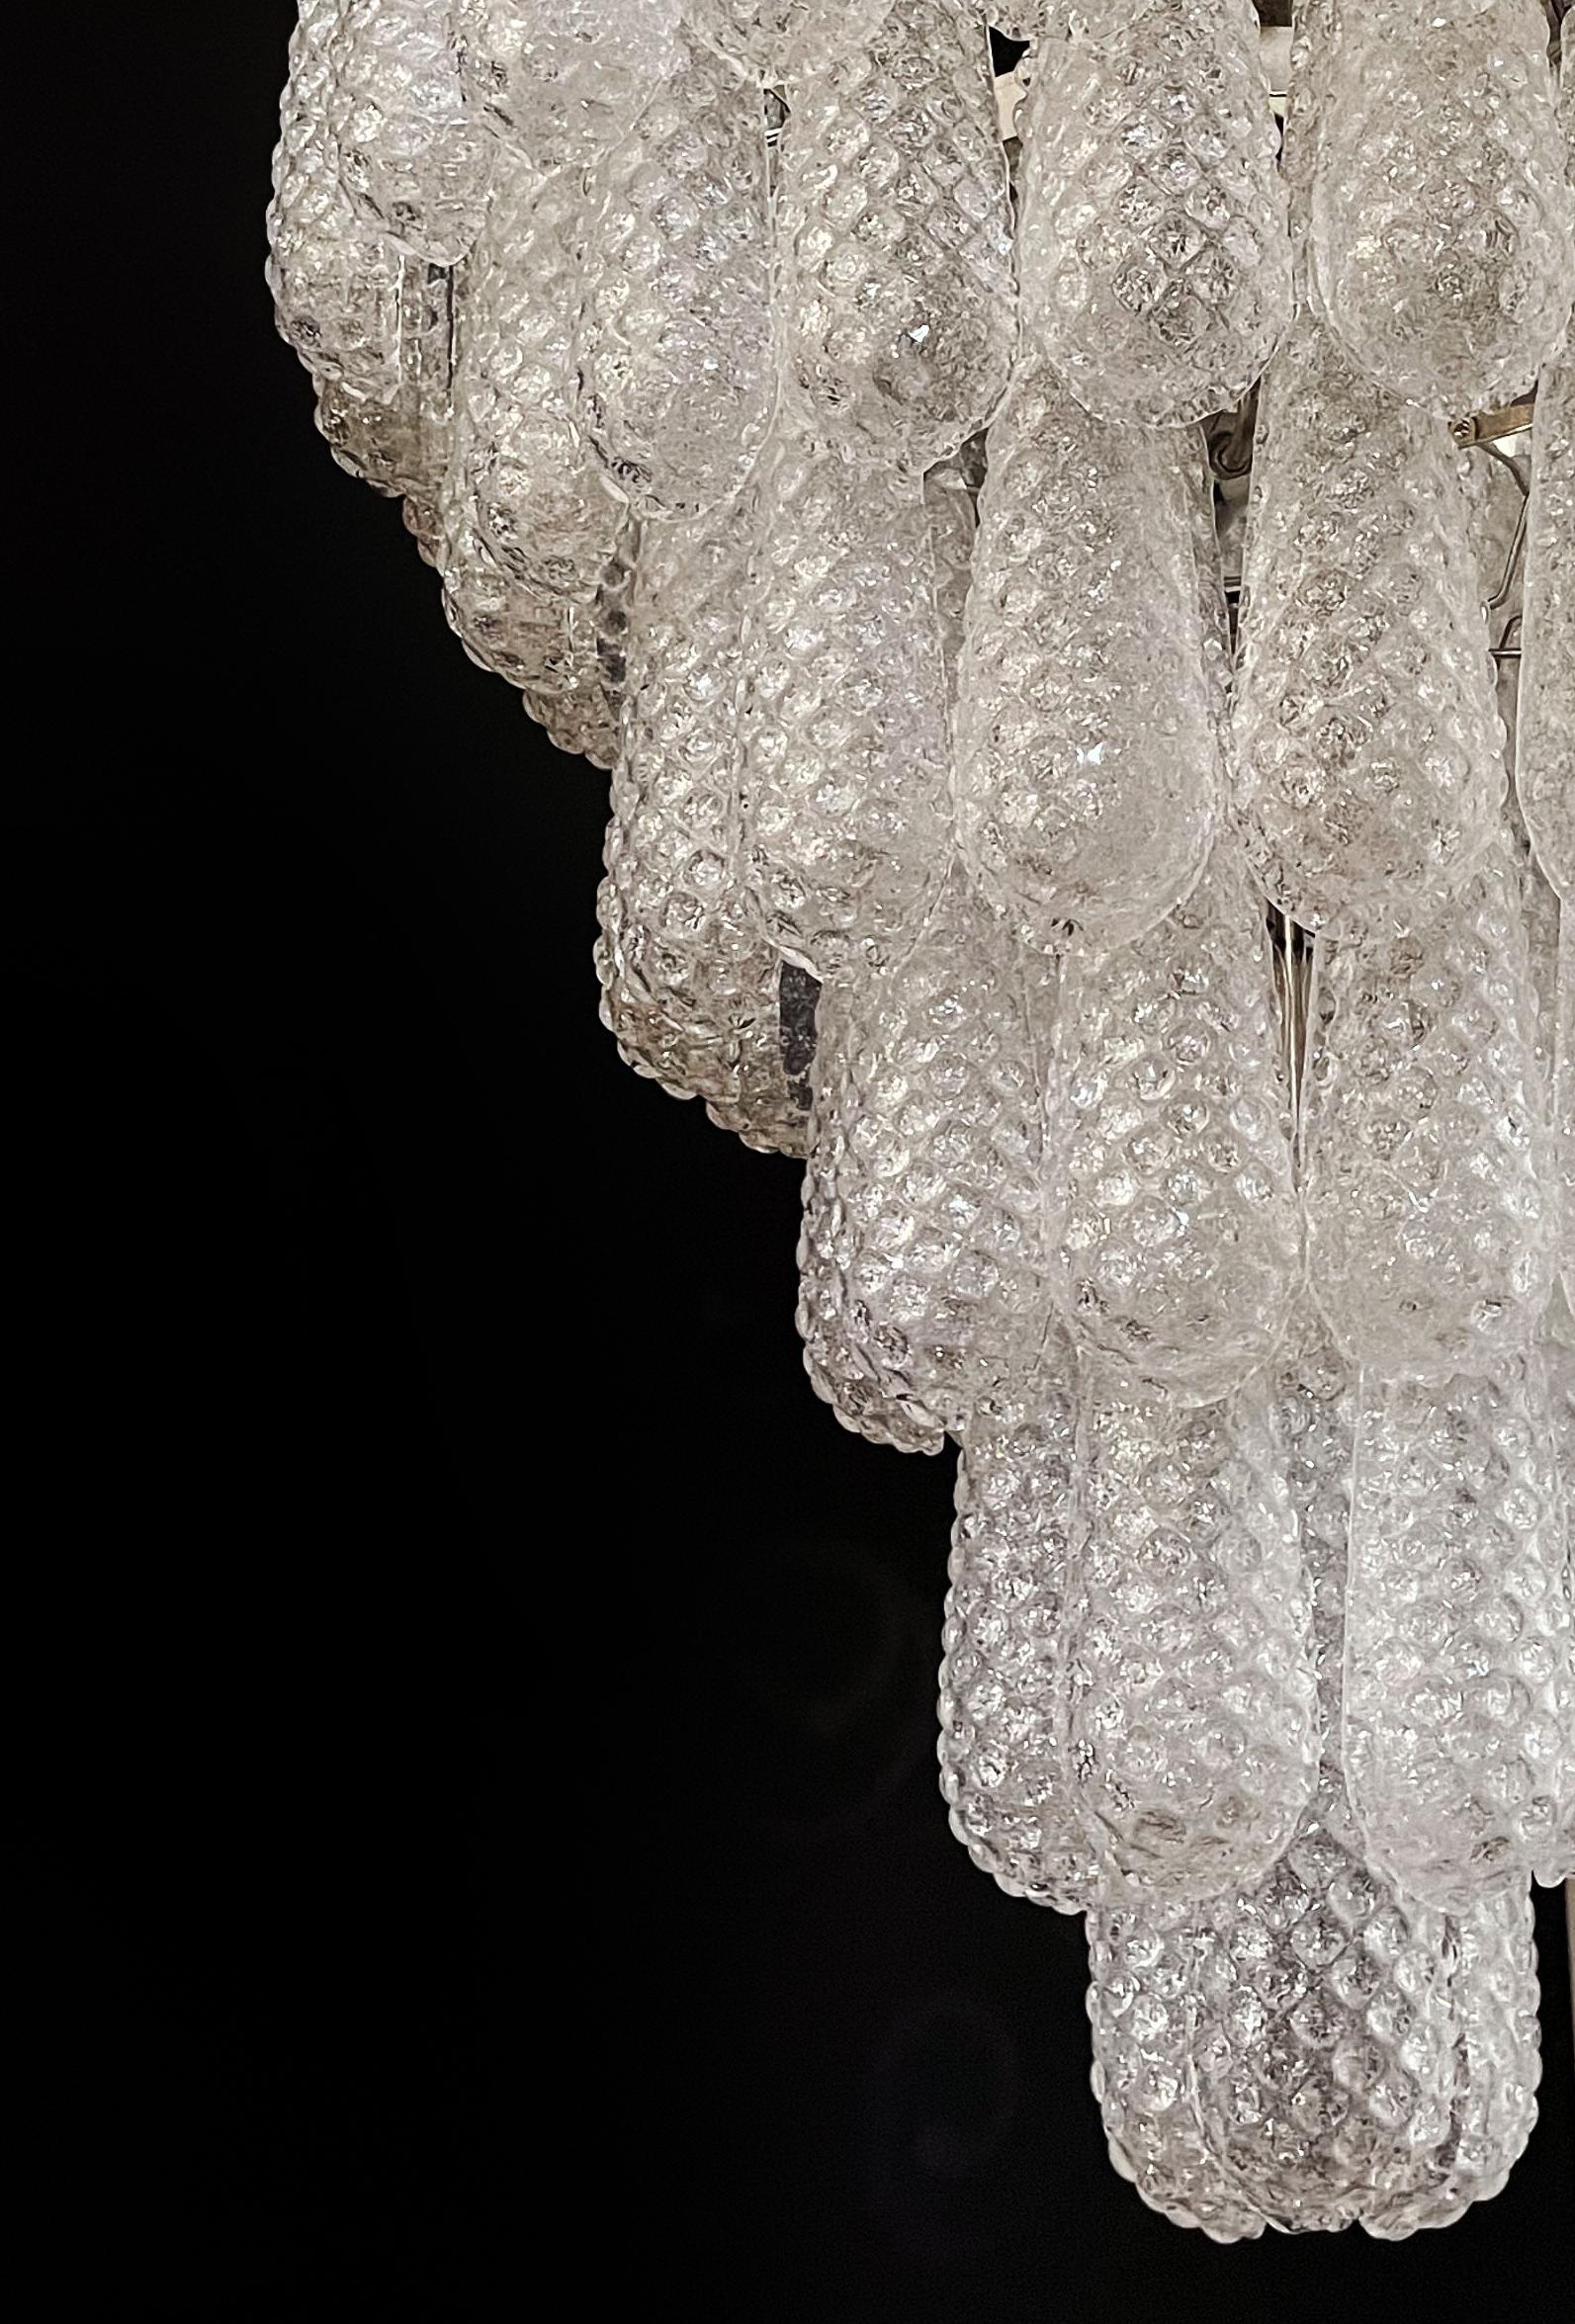 Magnificent Italian vintage Murano glass chandeliers - 75 glass petals drop For Sale 6